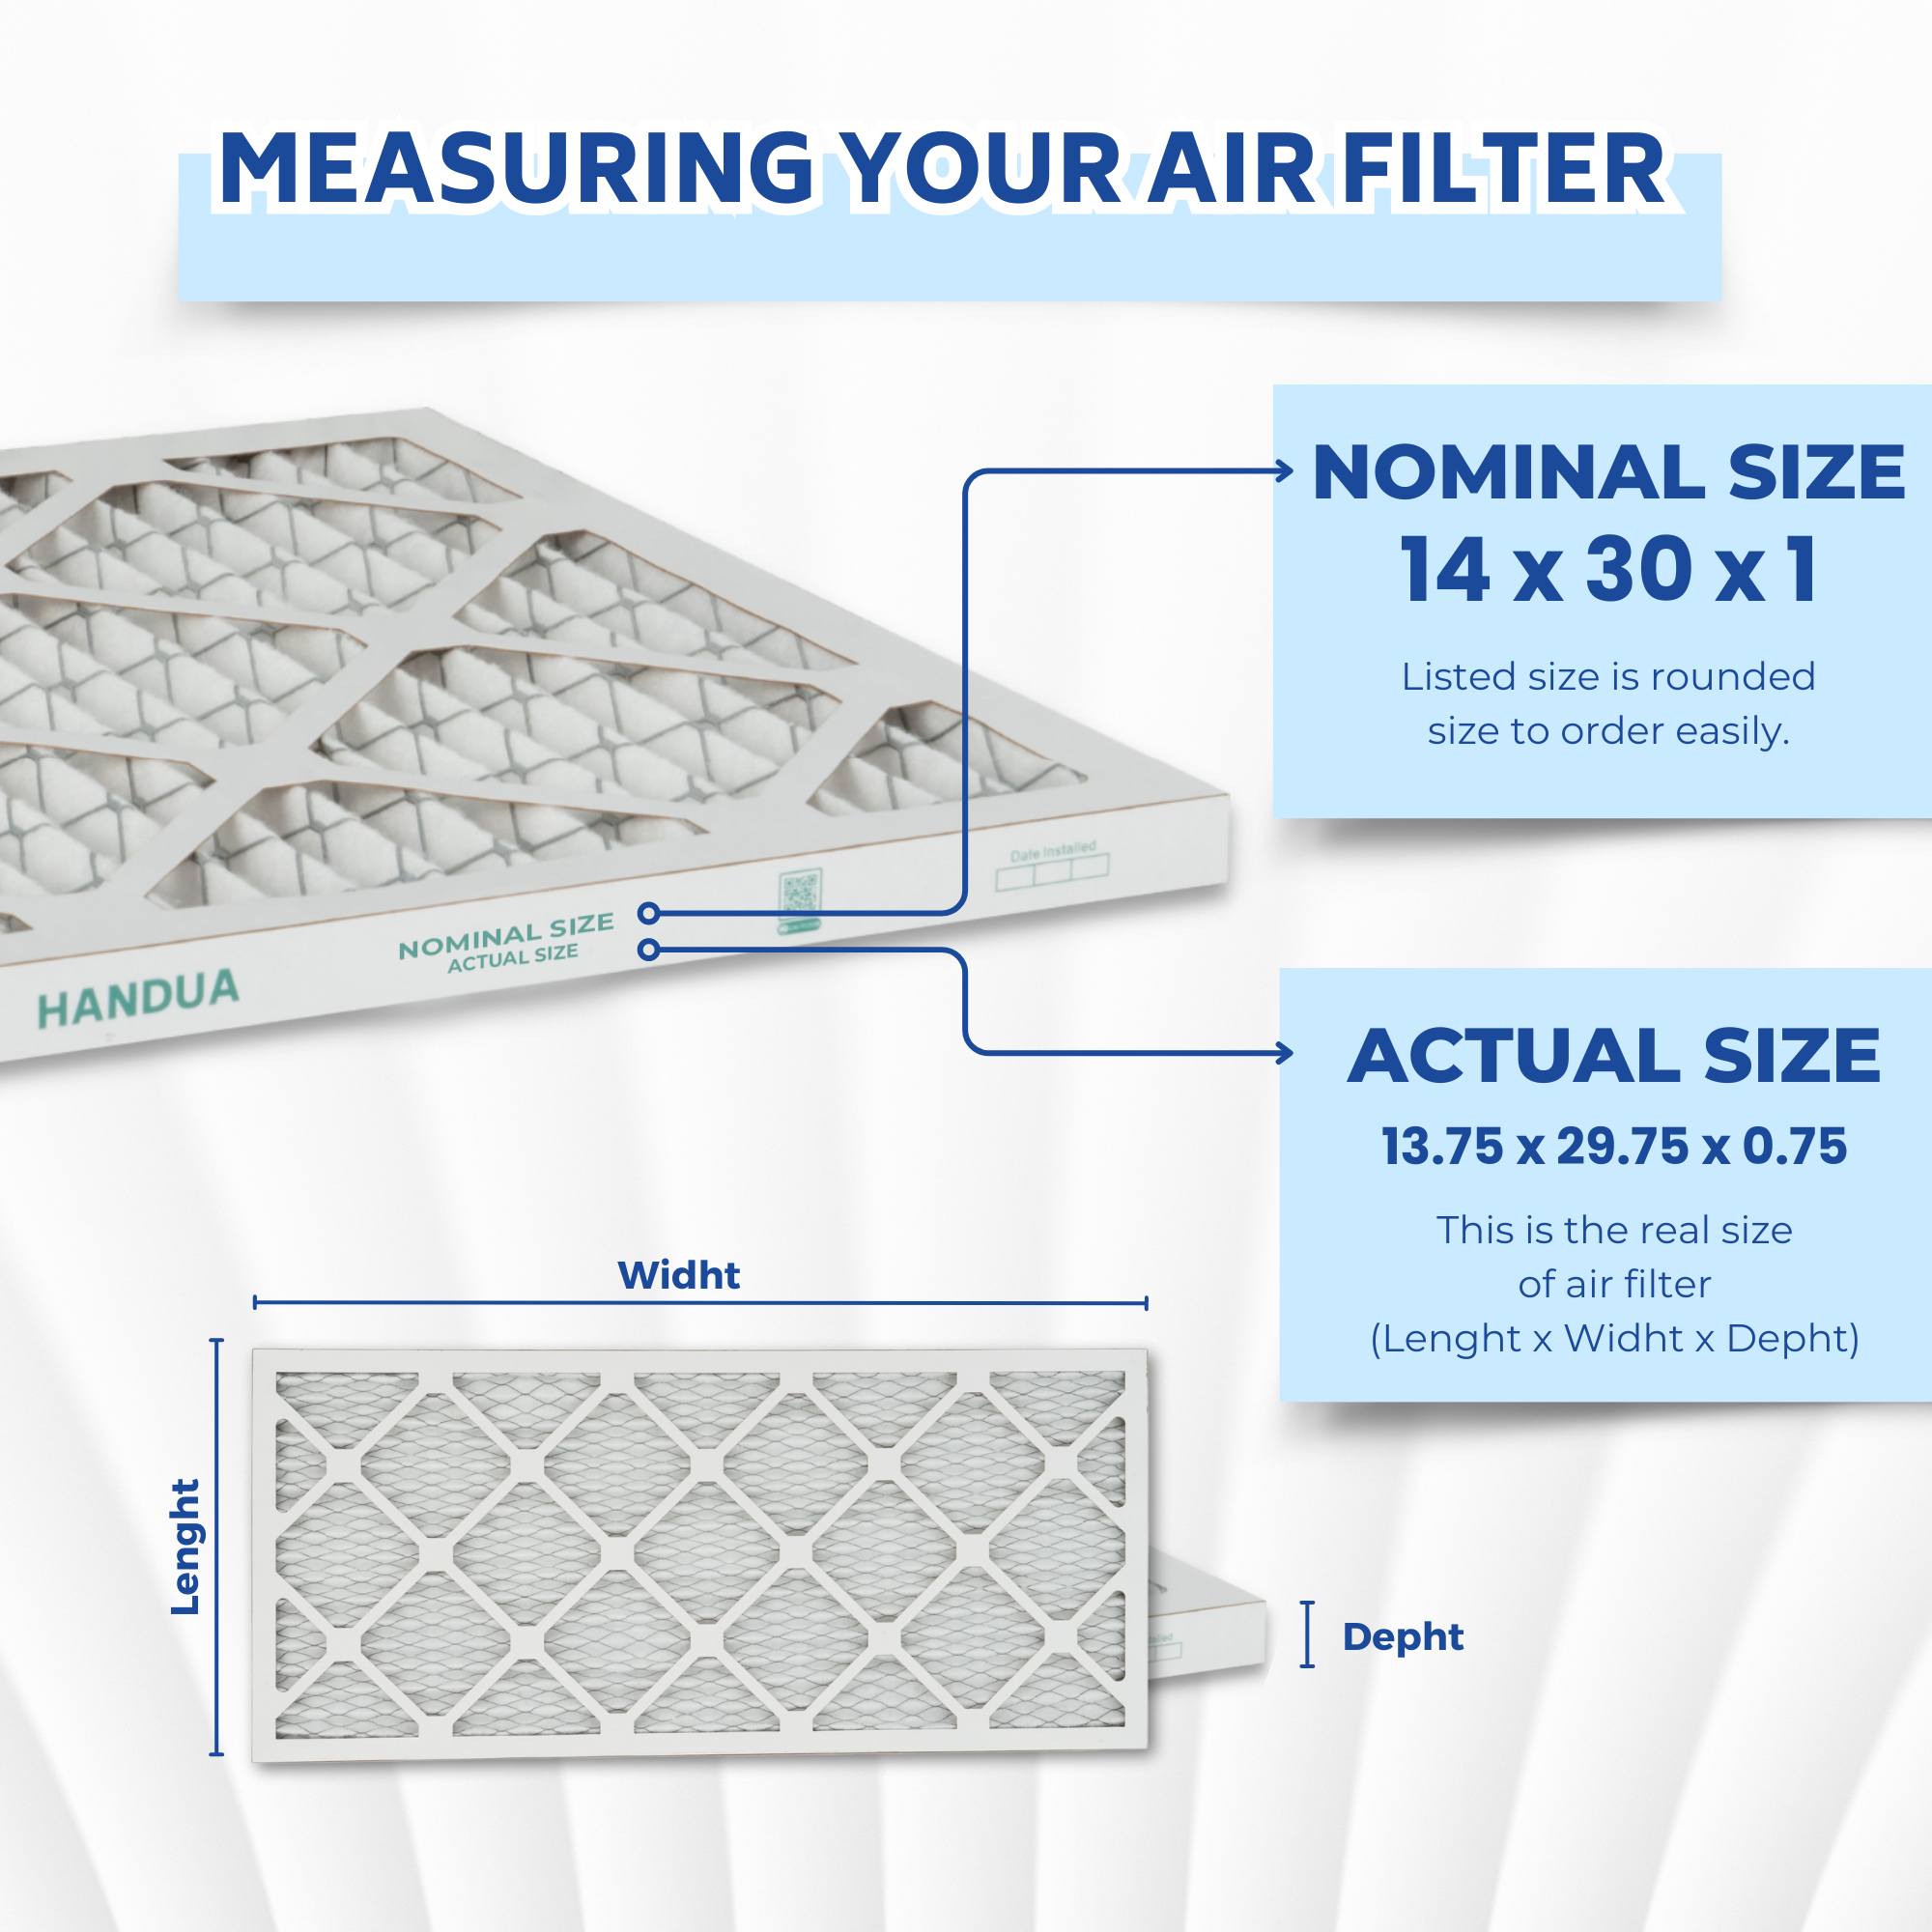 Handua 14x30x1 Air Filter MERV 11 Allergen Control, Plated Furnace AC Air Replacement Filter, 4 Pack (Actual Size: 13.75" x 29.75" x 0.75")